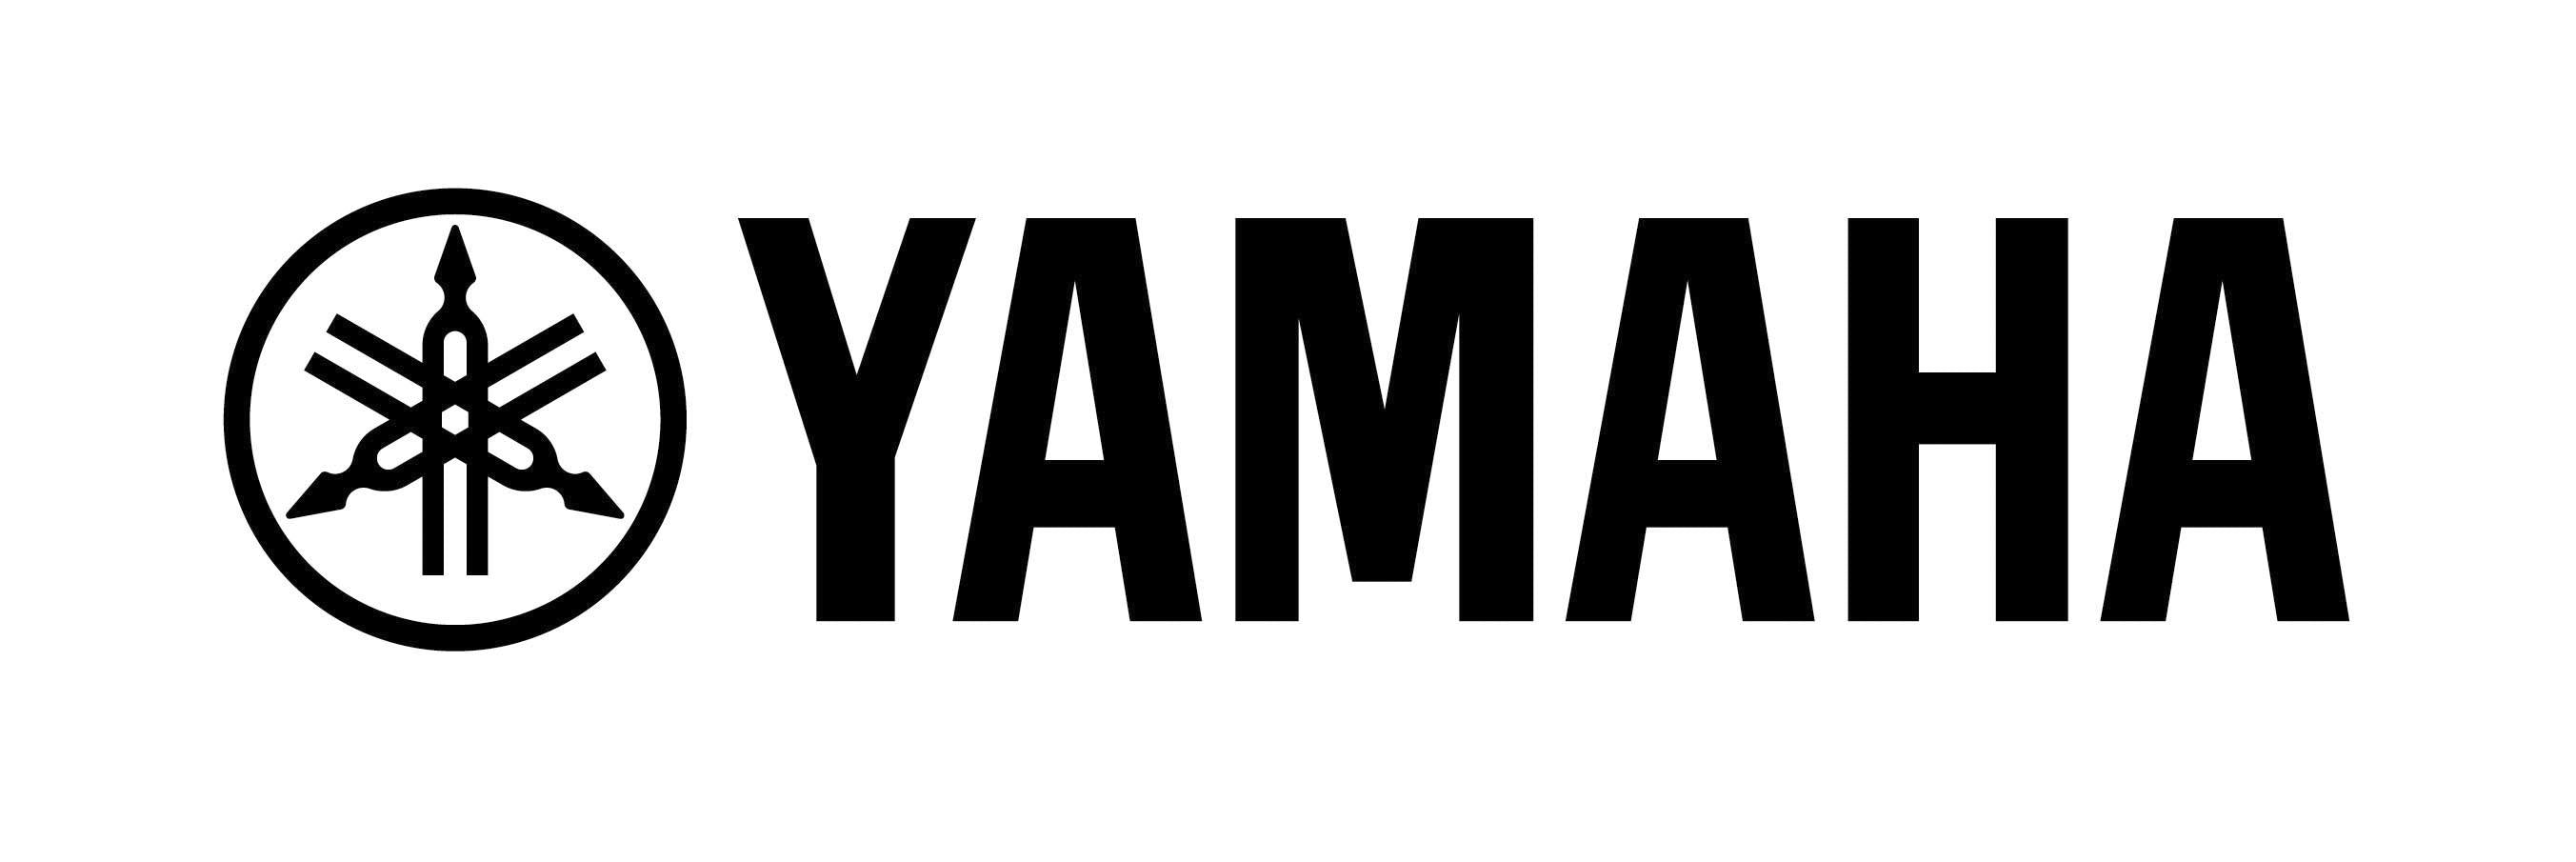 yamaha_logo_2017_black.jpg__PID:596691b0-4465-4e1a-a350-40df1131c586